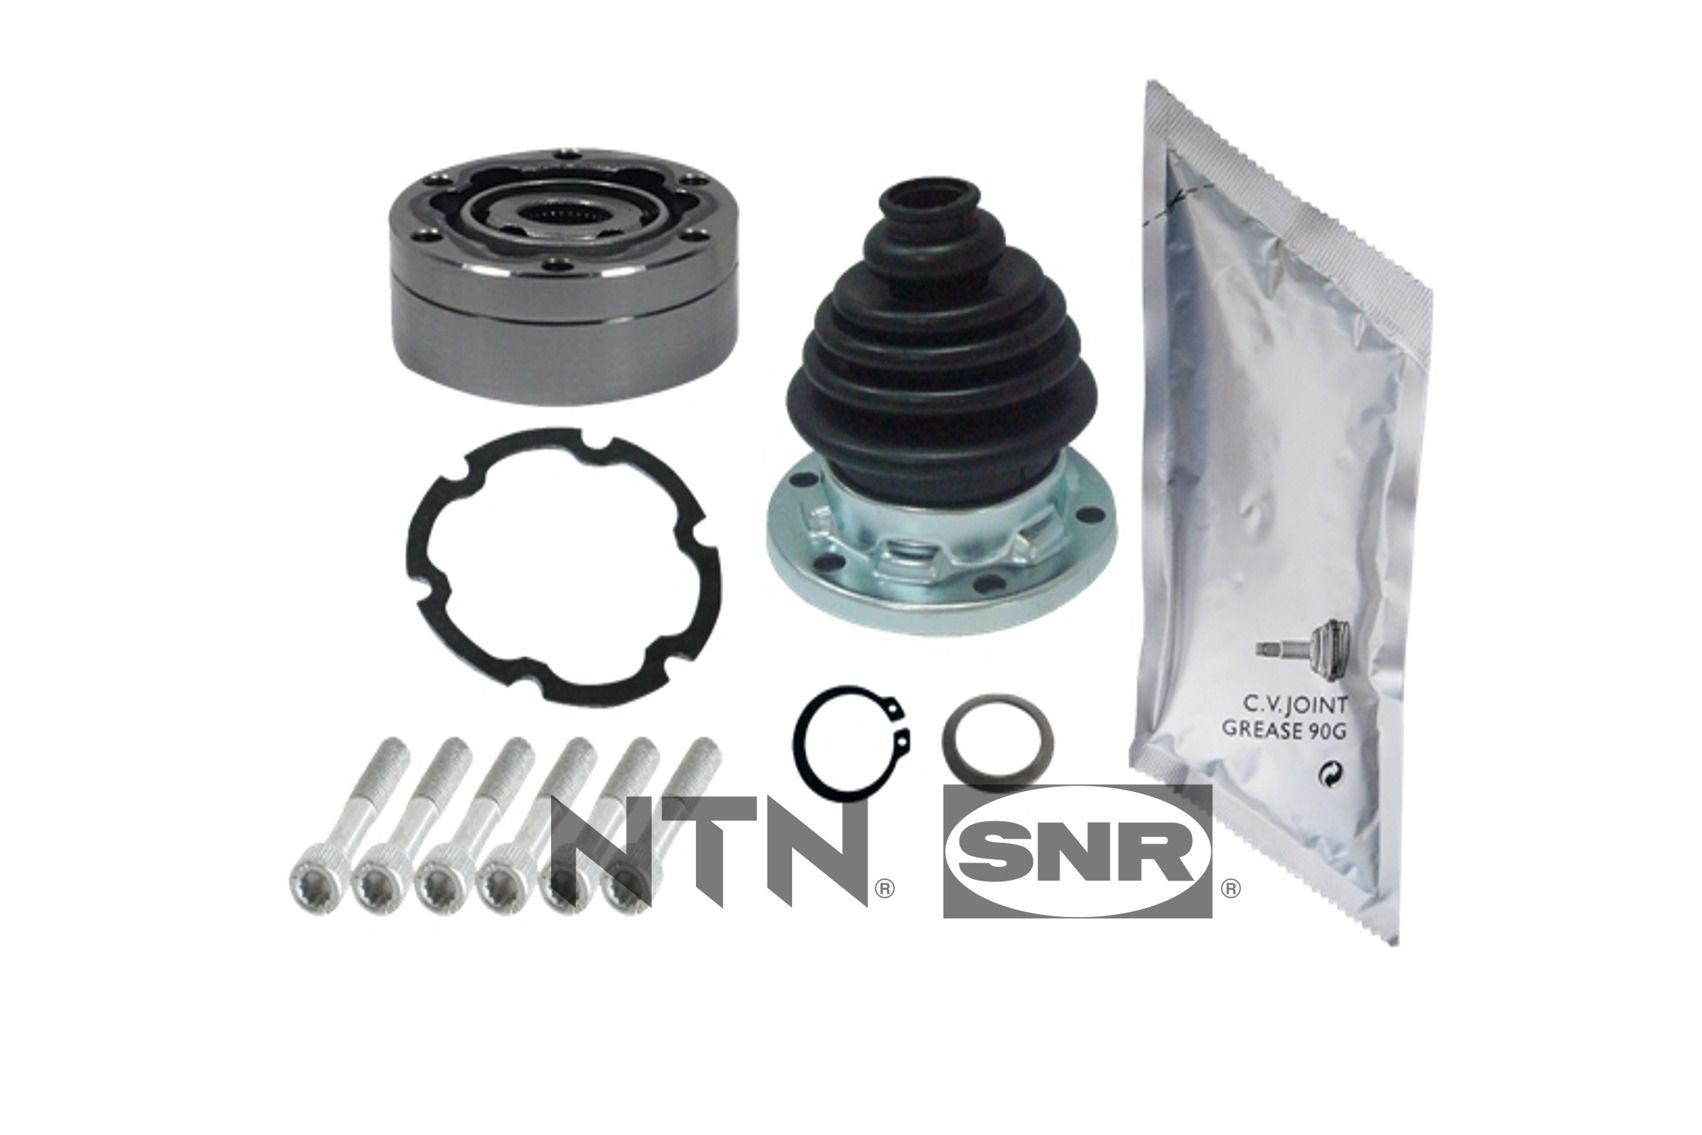 Original SNR Cv joint kit IJK54.003 for VW GOLF